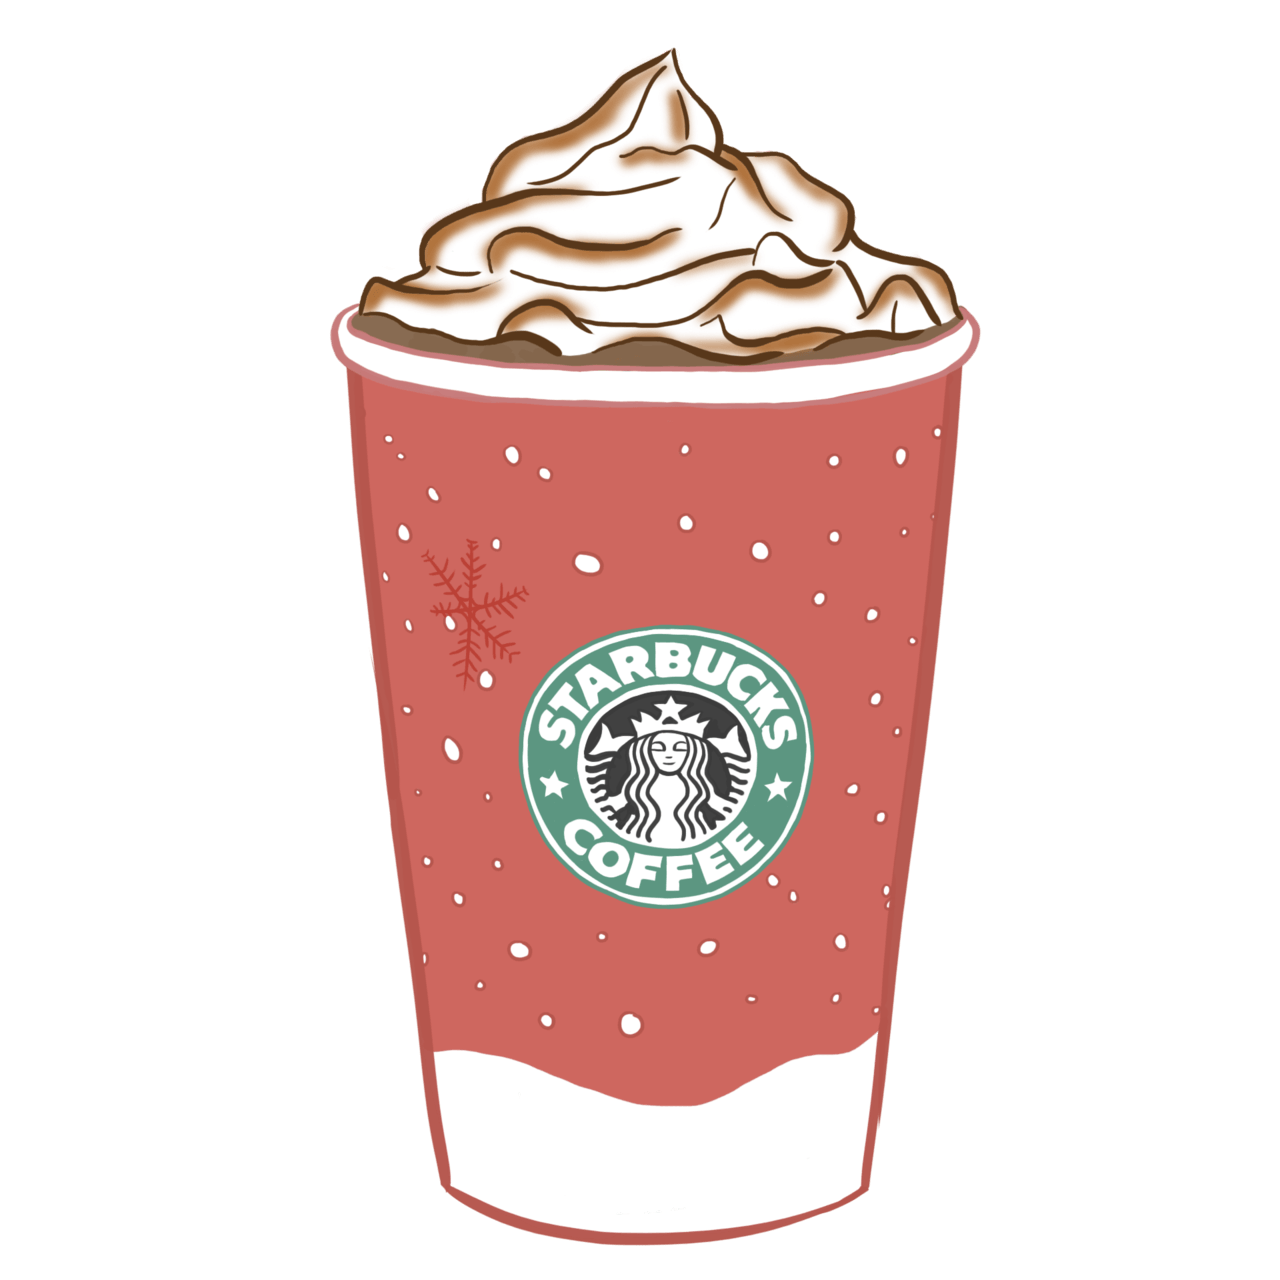 image For > Starbucks Transparent Tumblr Pink in 2019